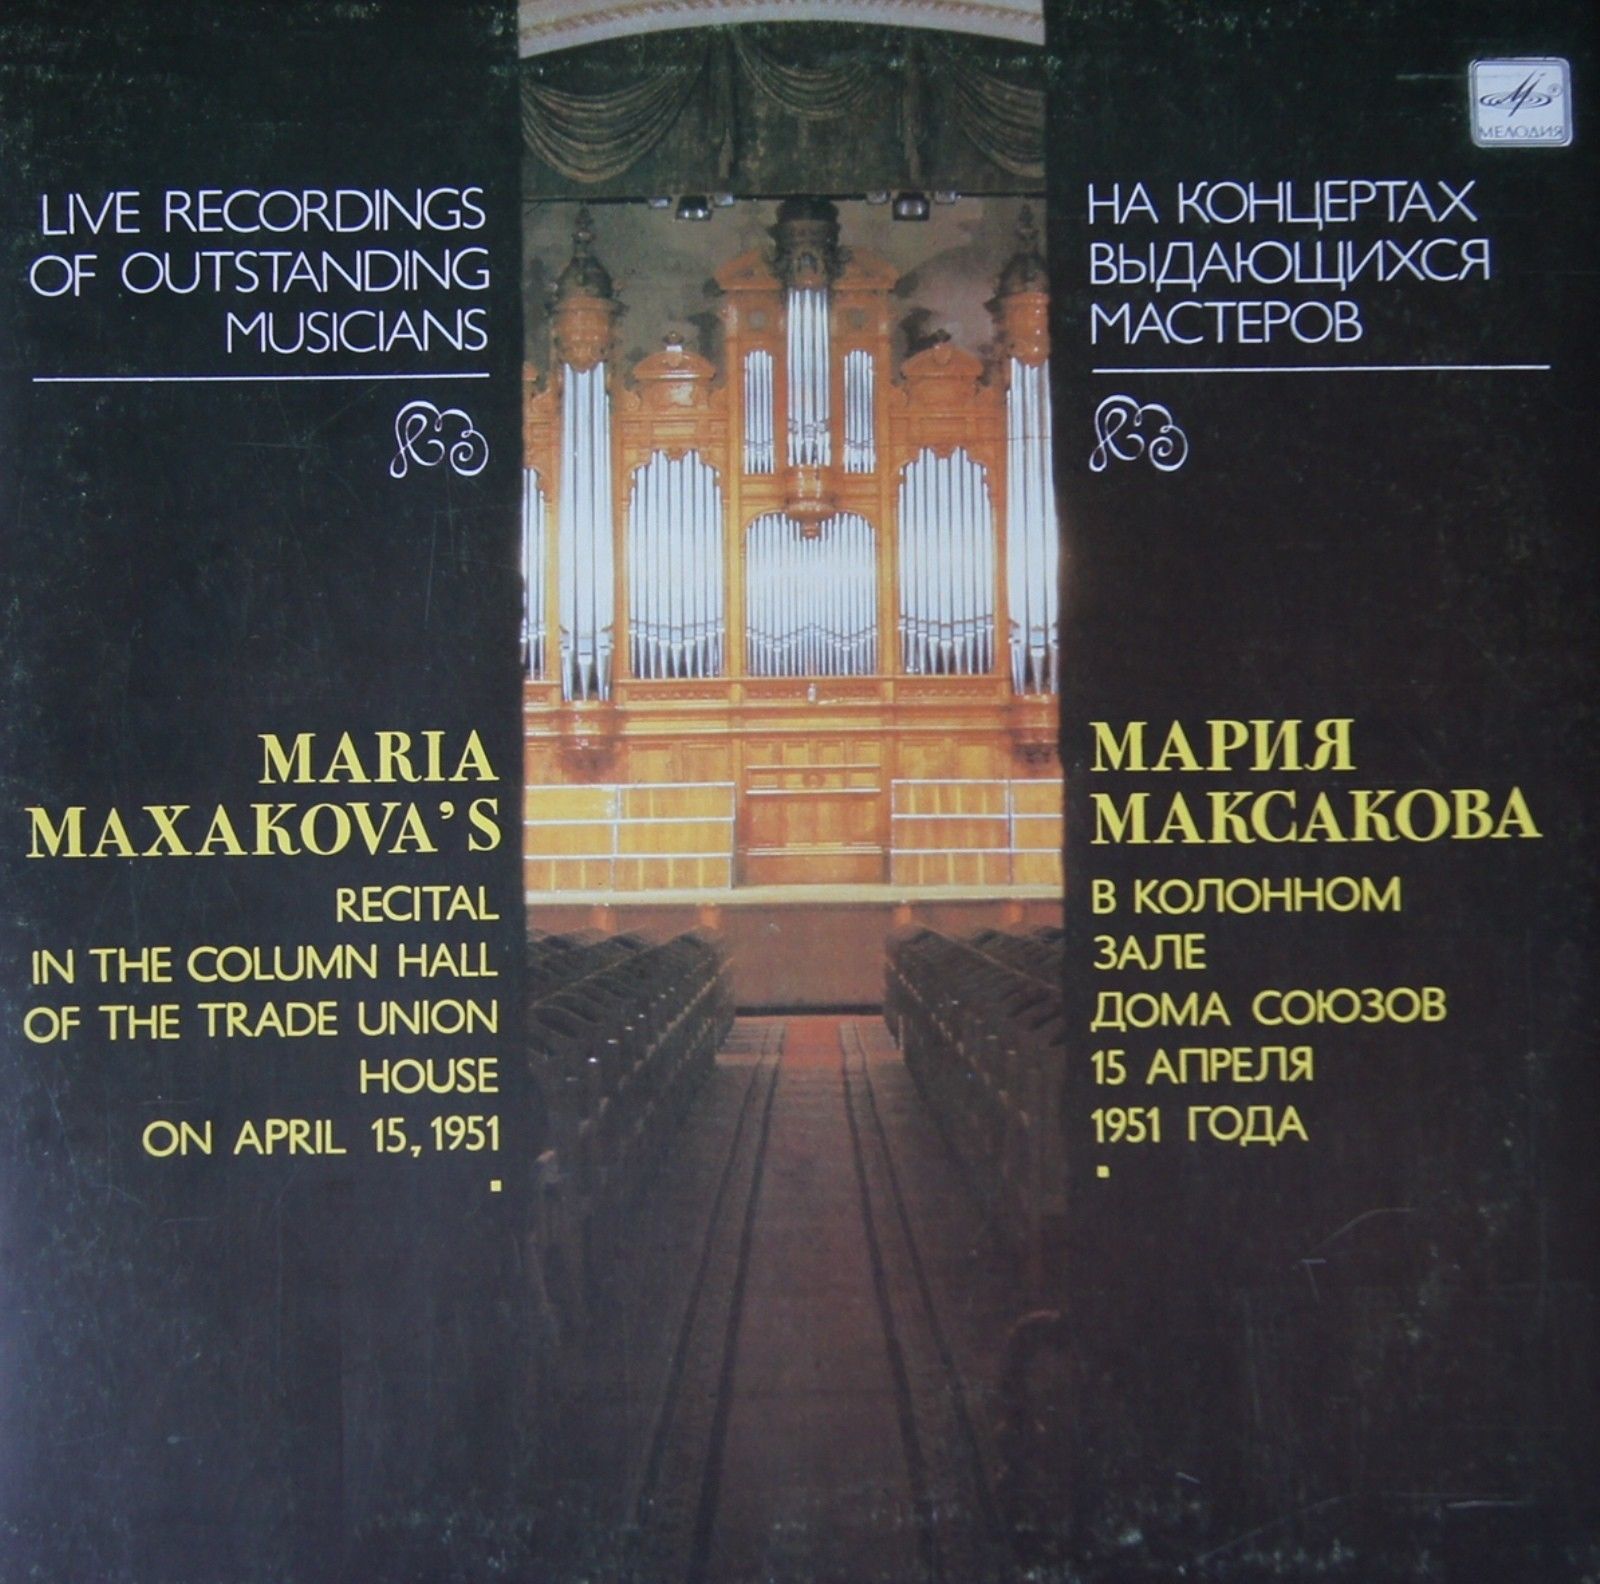 Мария МАКСАКОВА (меццо-сопрано)